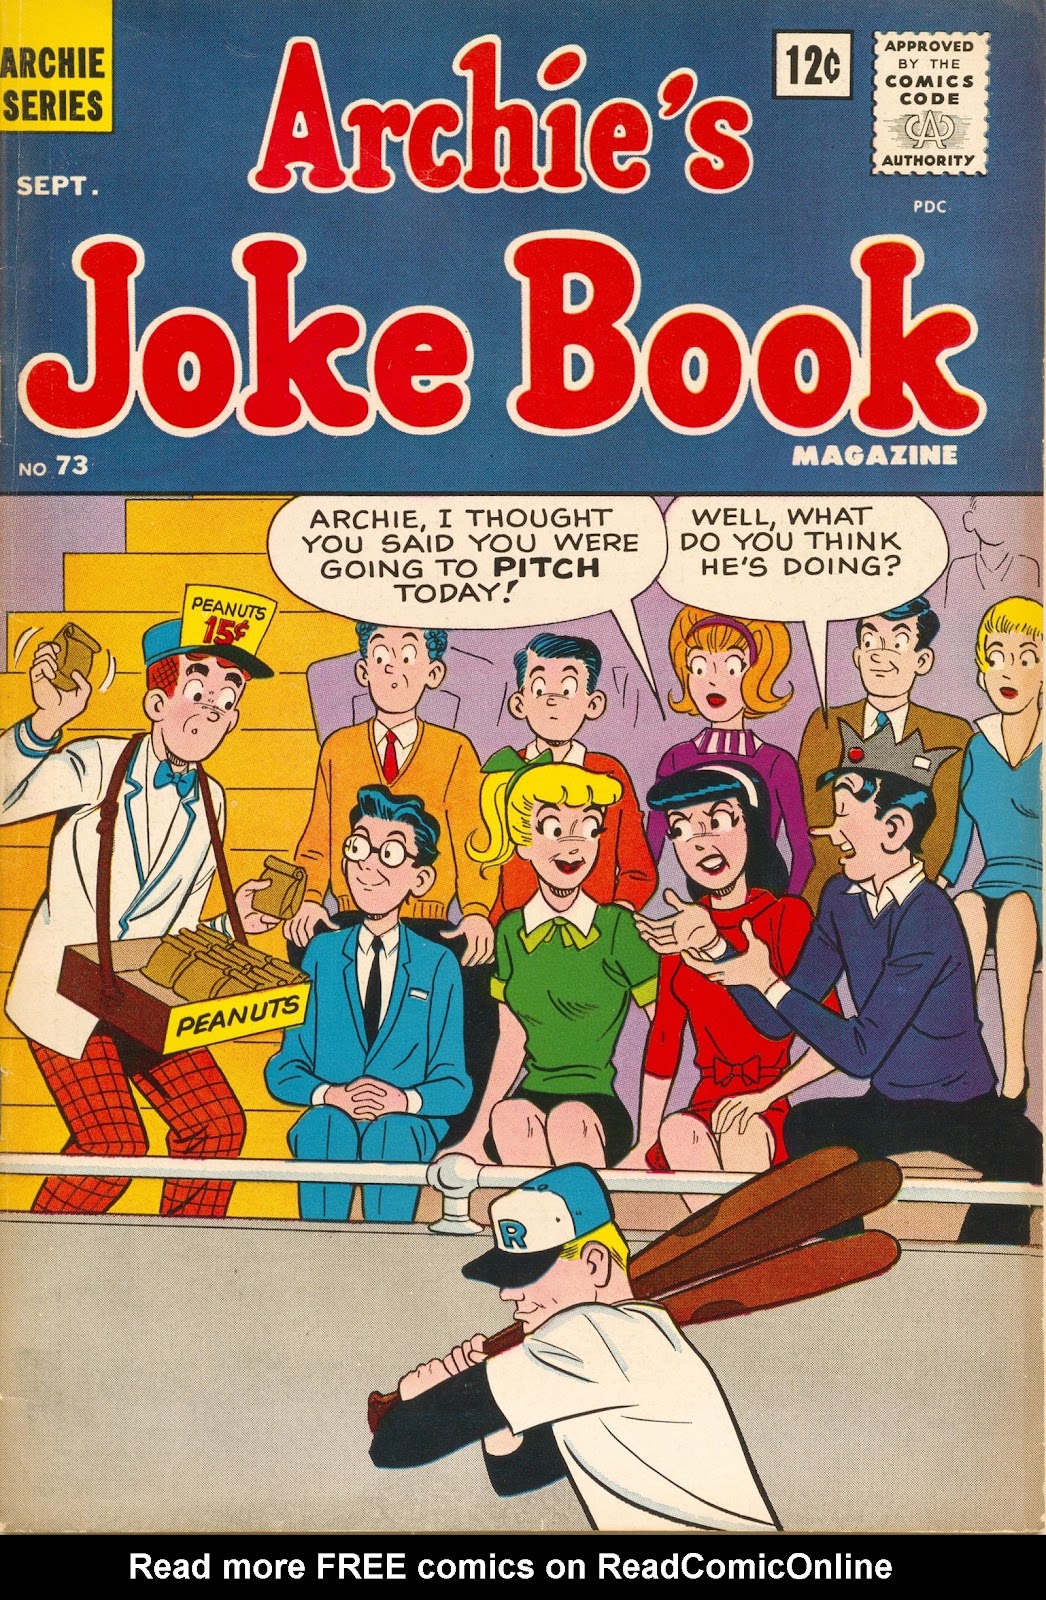 Archie's Joke Book Magazine issue 73 - Page 1